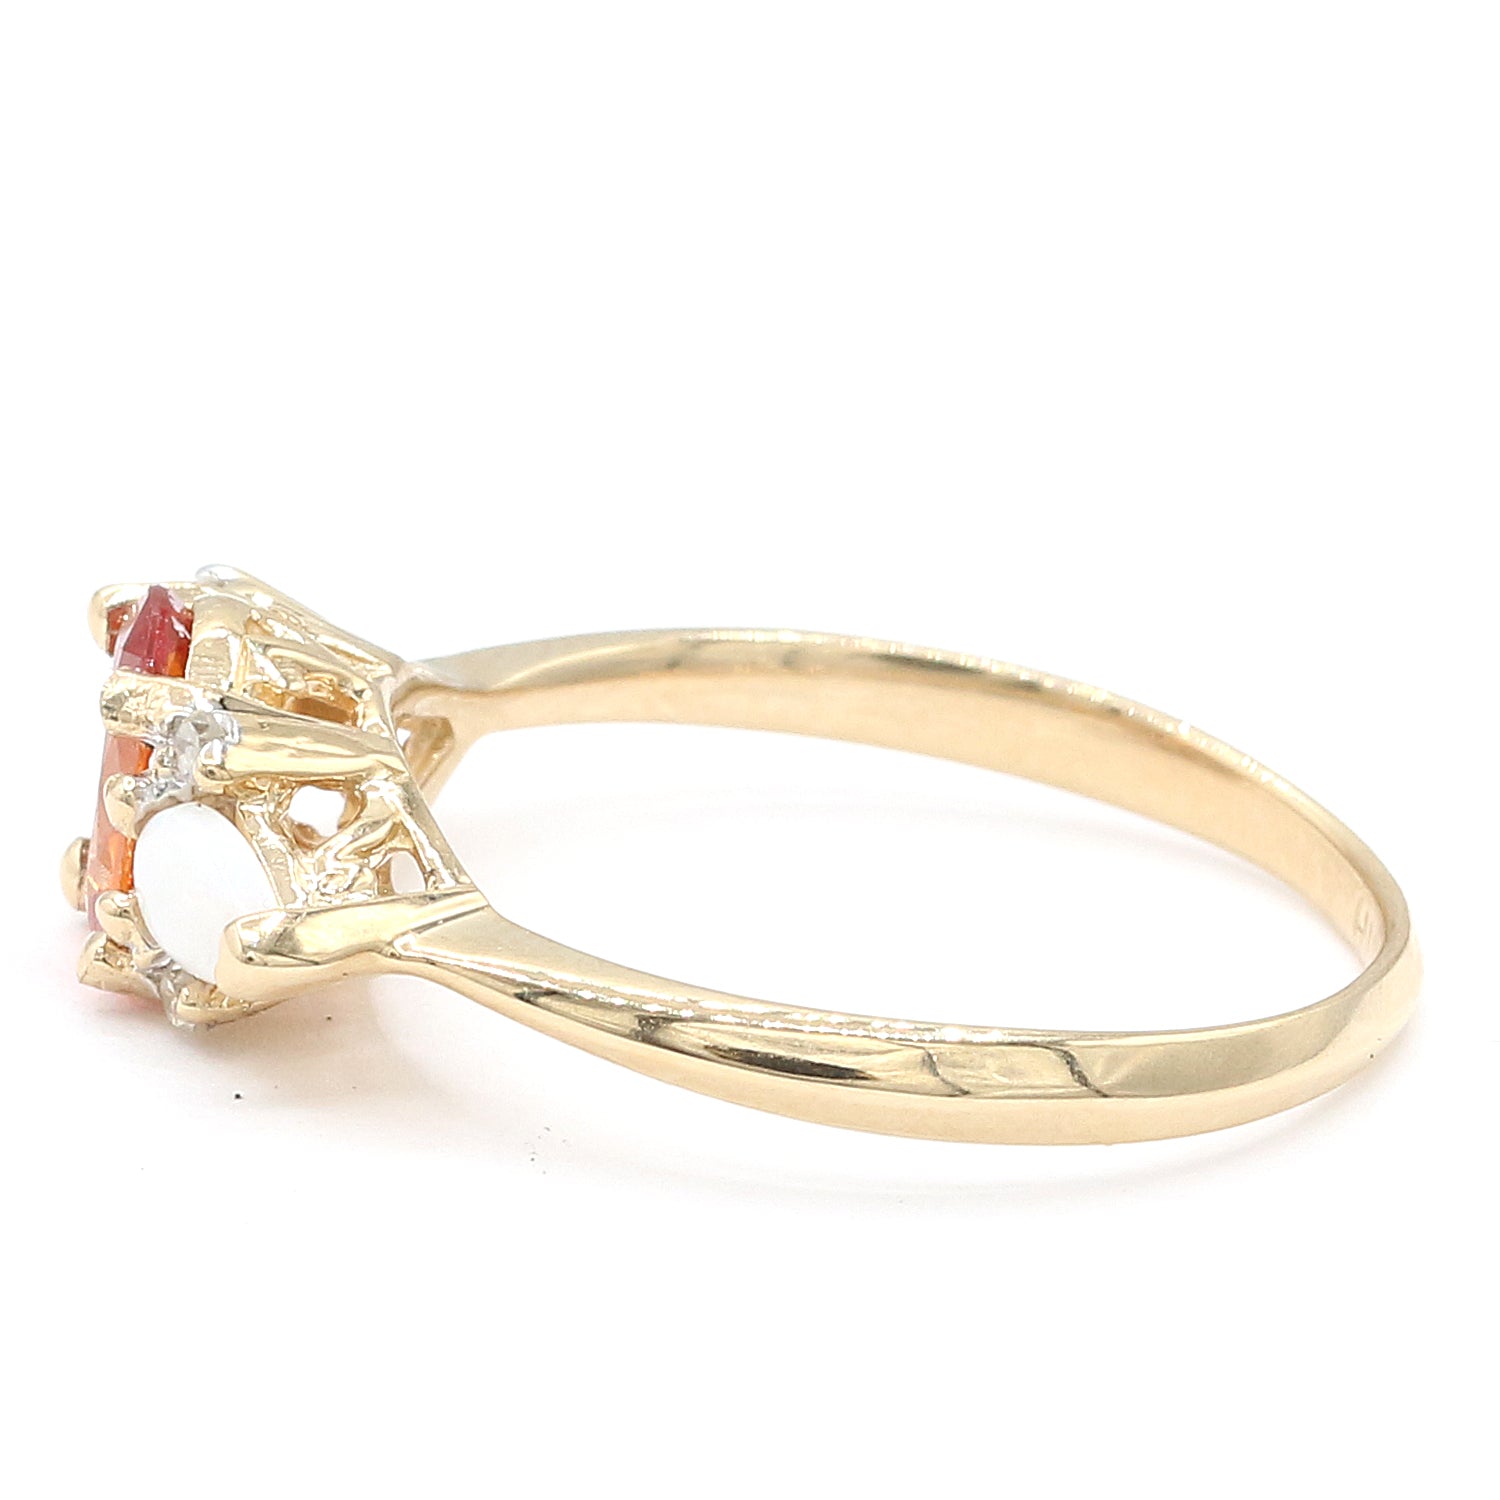 Golden Jewel 14K Yellow Gold Fire Opal, White Opal & Diamond Ring